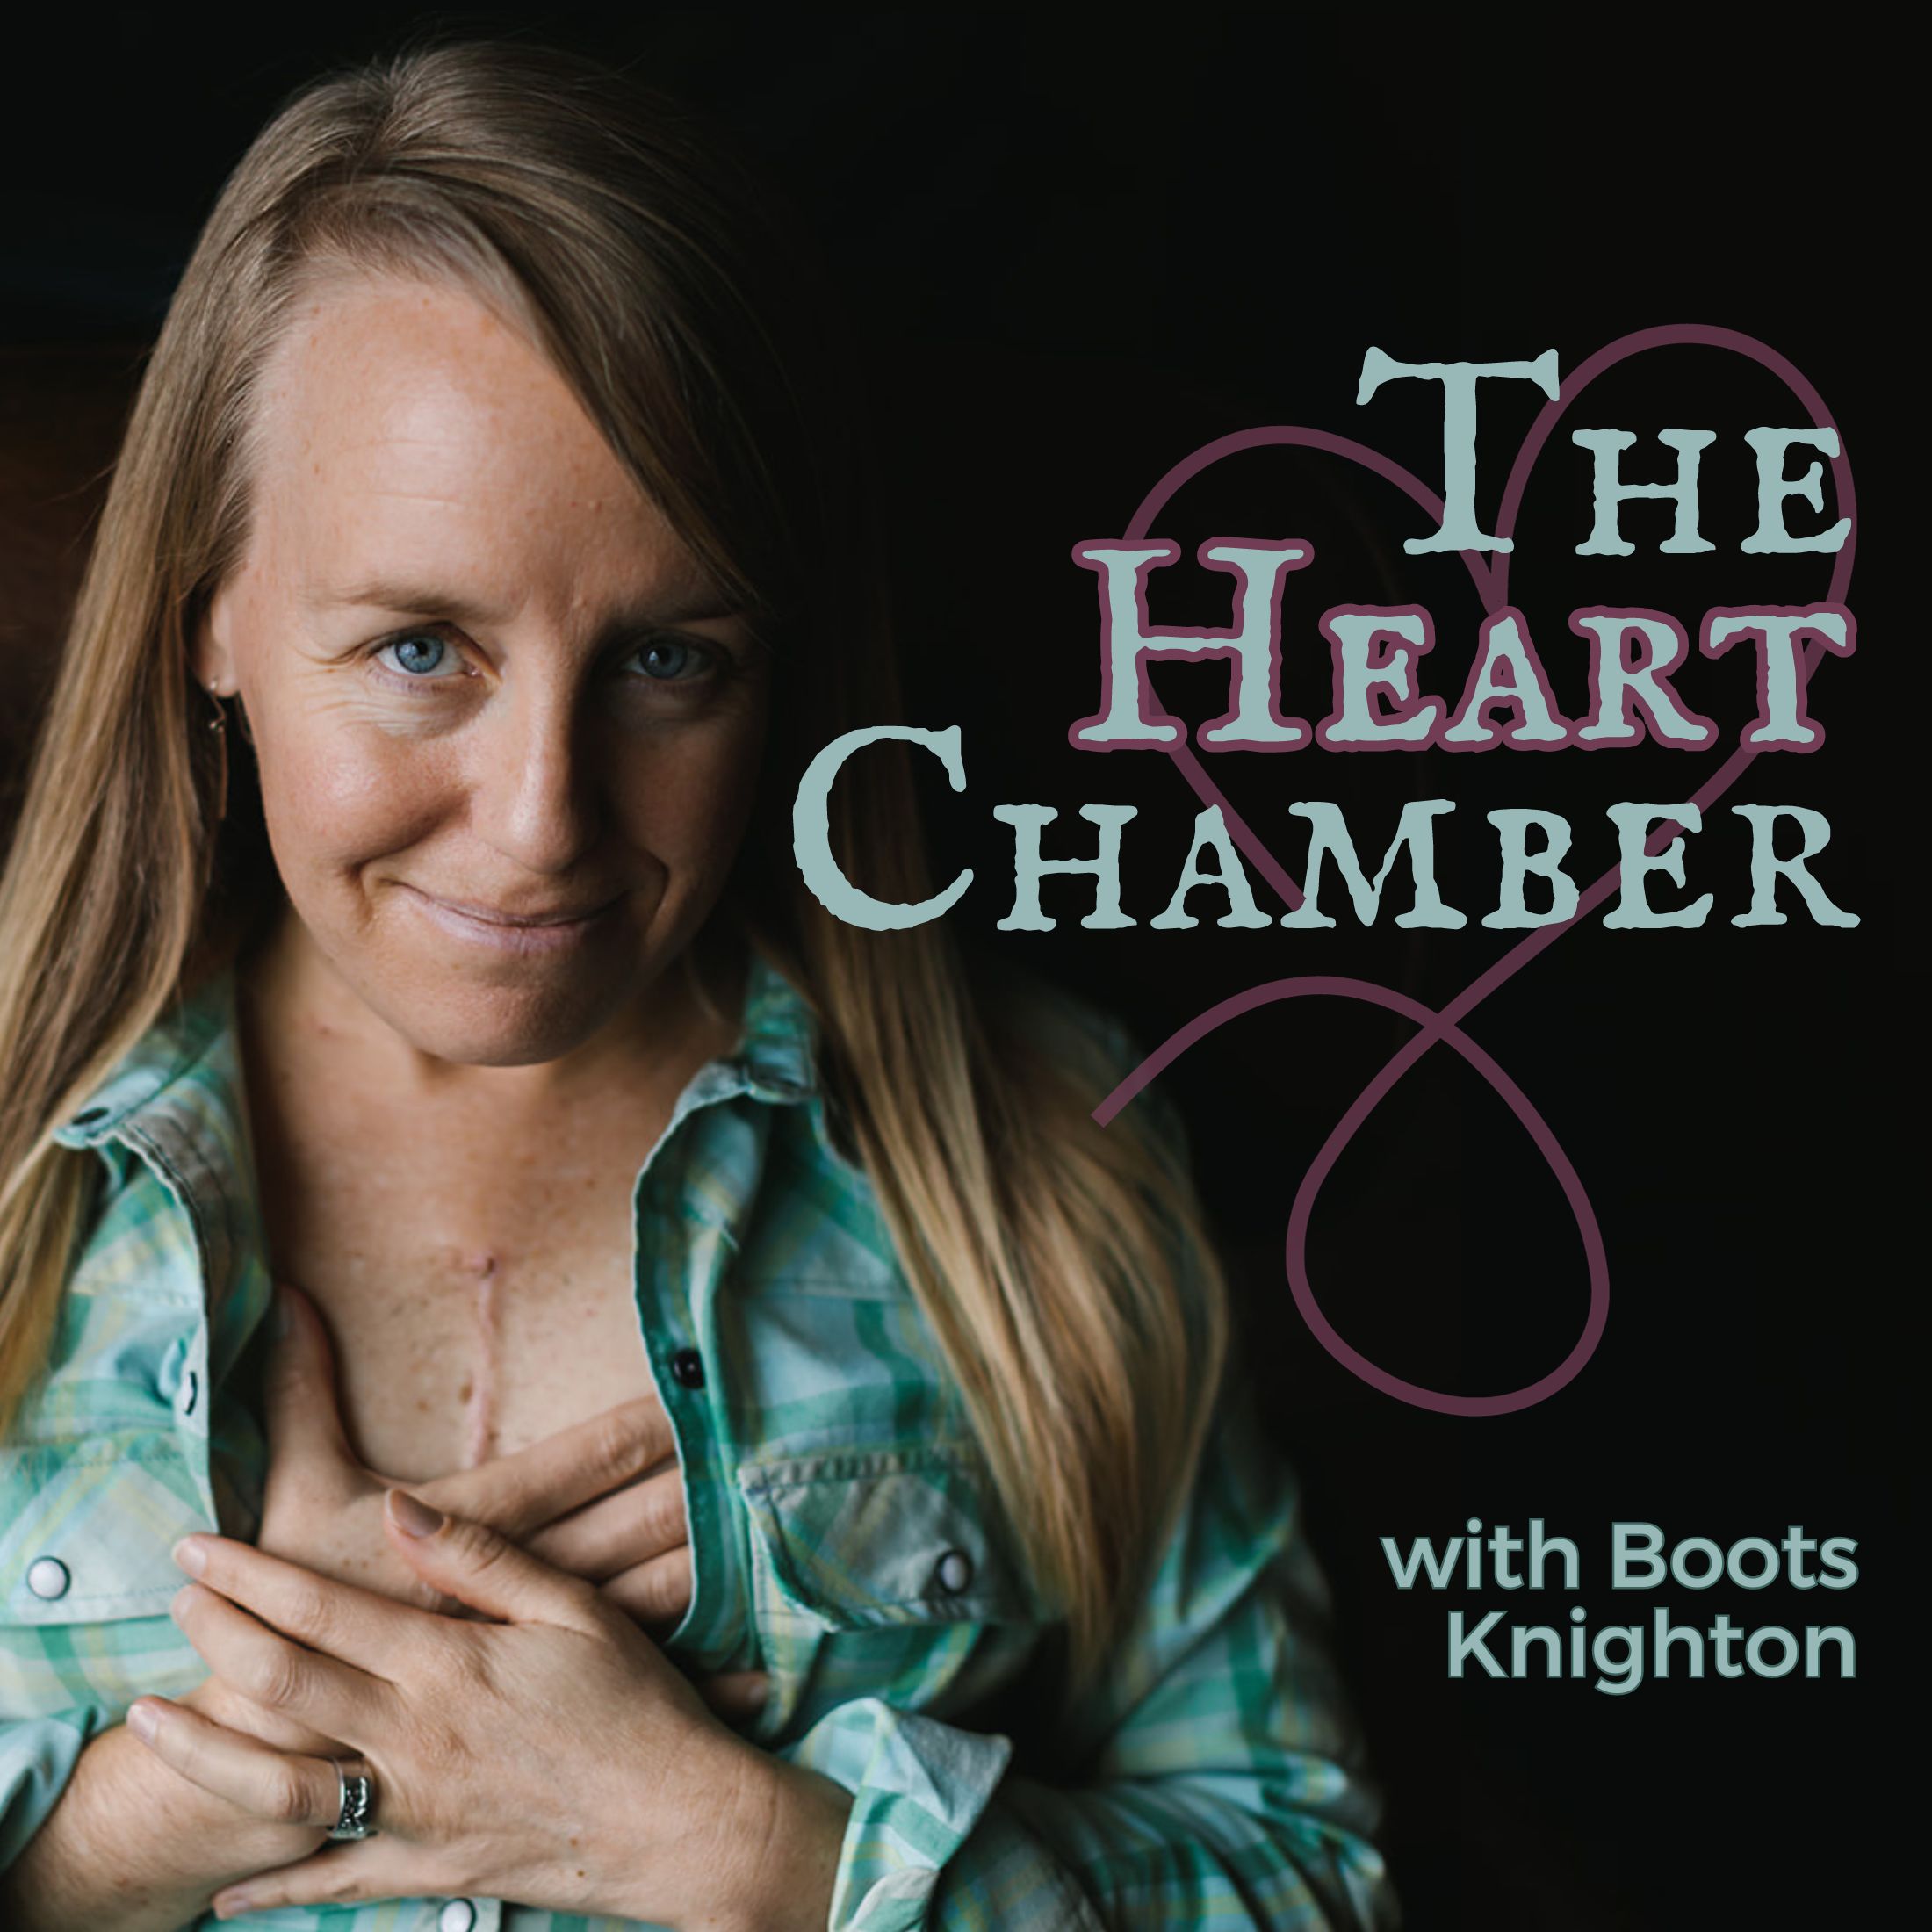 The Heart Chamber's artwork